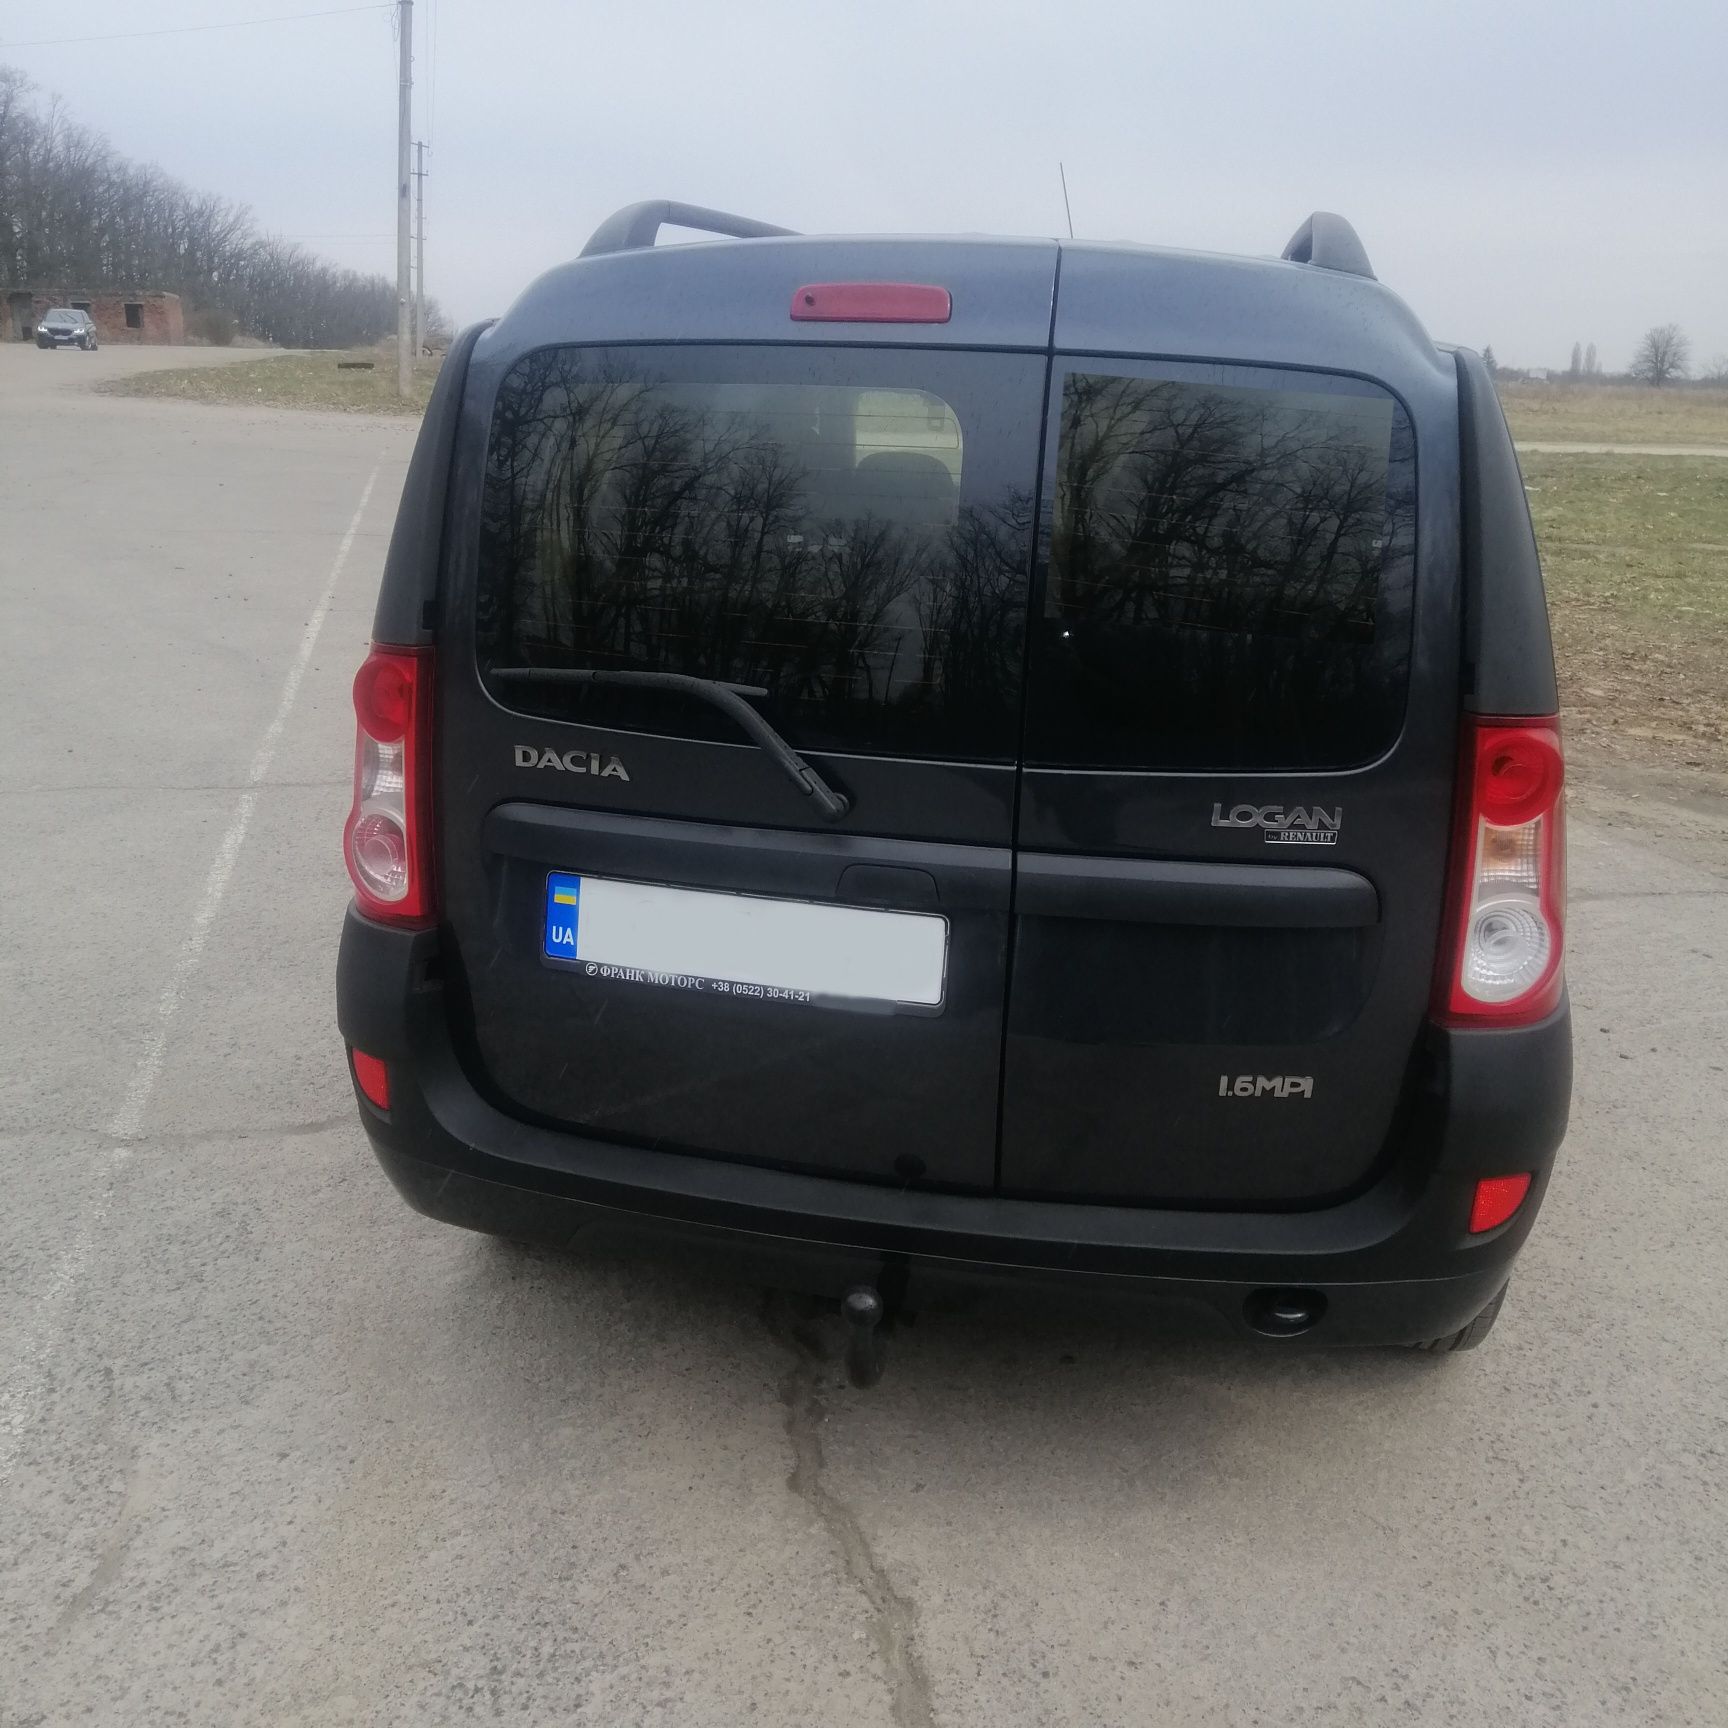 Dacia logan MCV 1,6  laureat 7 мест, кандер